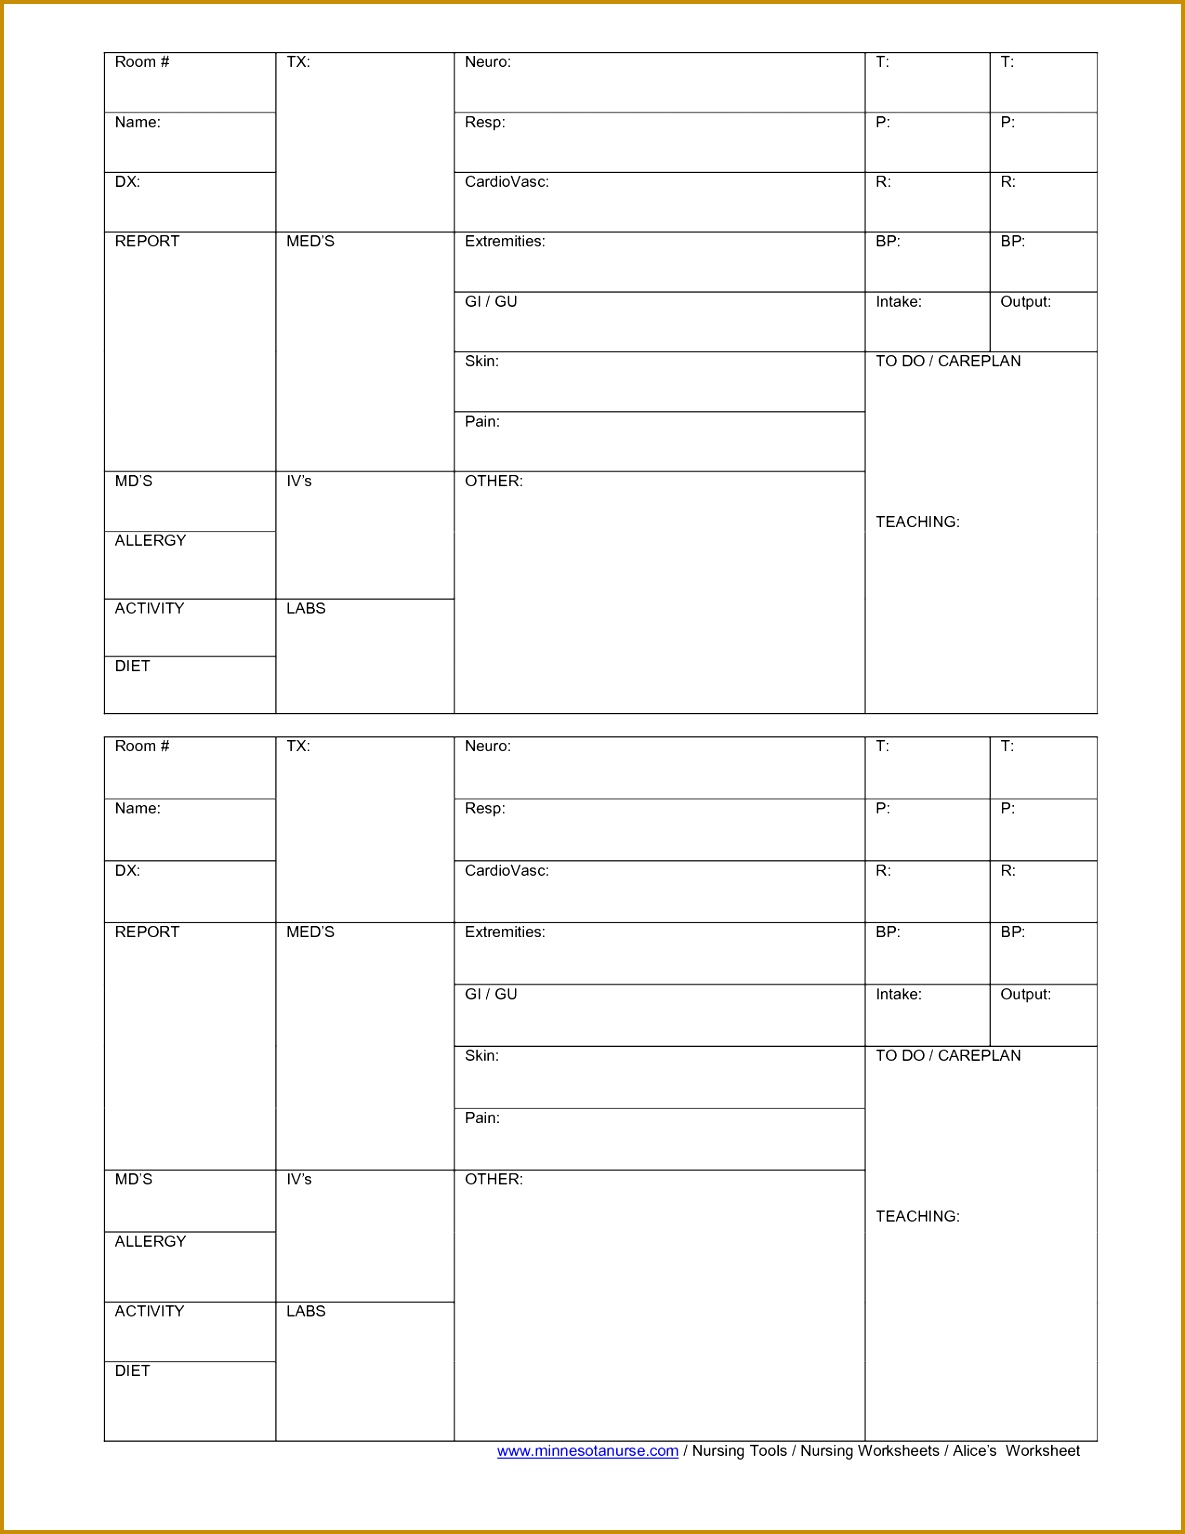 Blank Nursing Report Sheets for newborns Nursing Patient Worksheet Random Pinterest 11851534